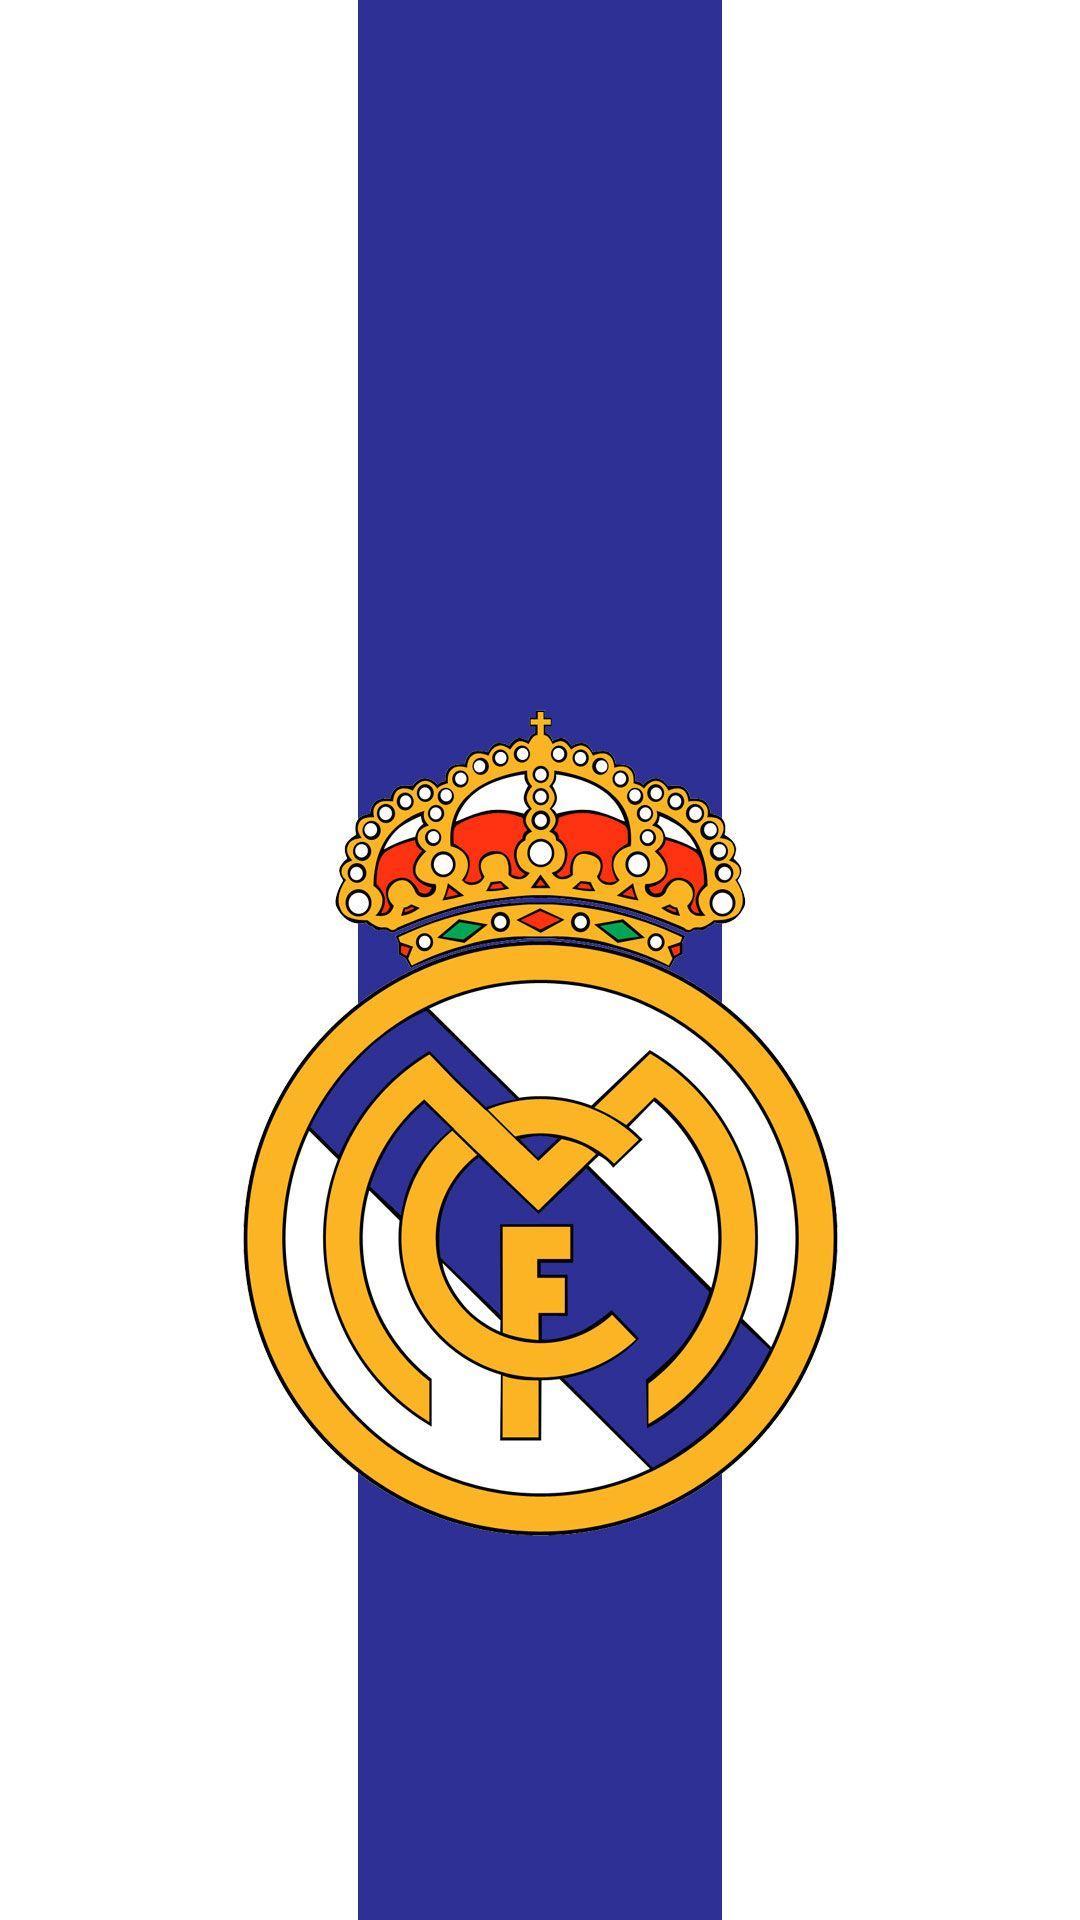 Real Madrid Lockscreen Wallpapers 1080 x 1920 : realmadrid